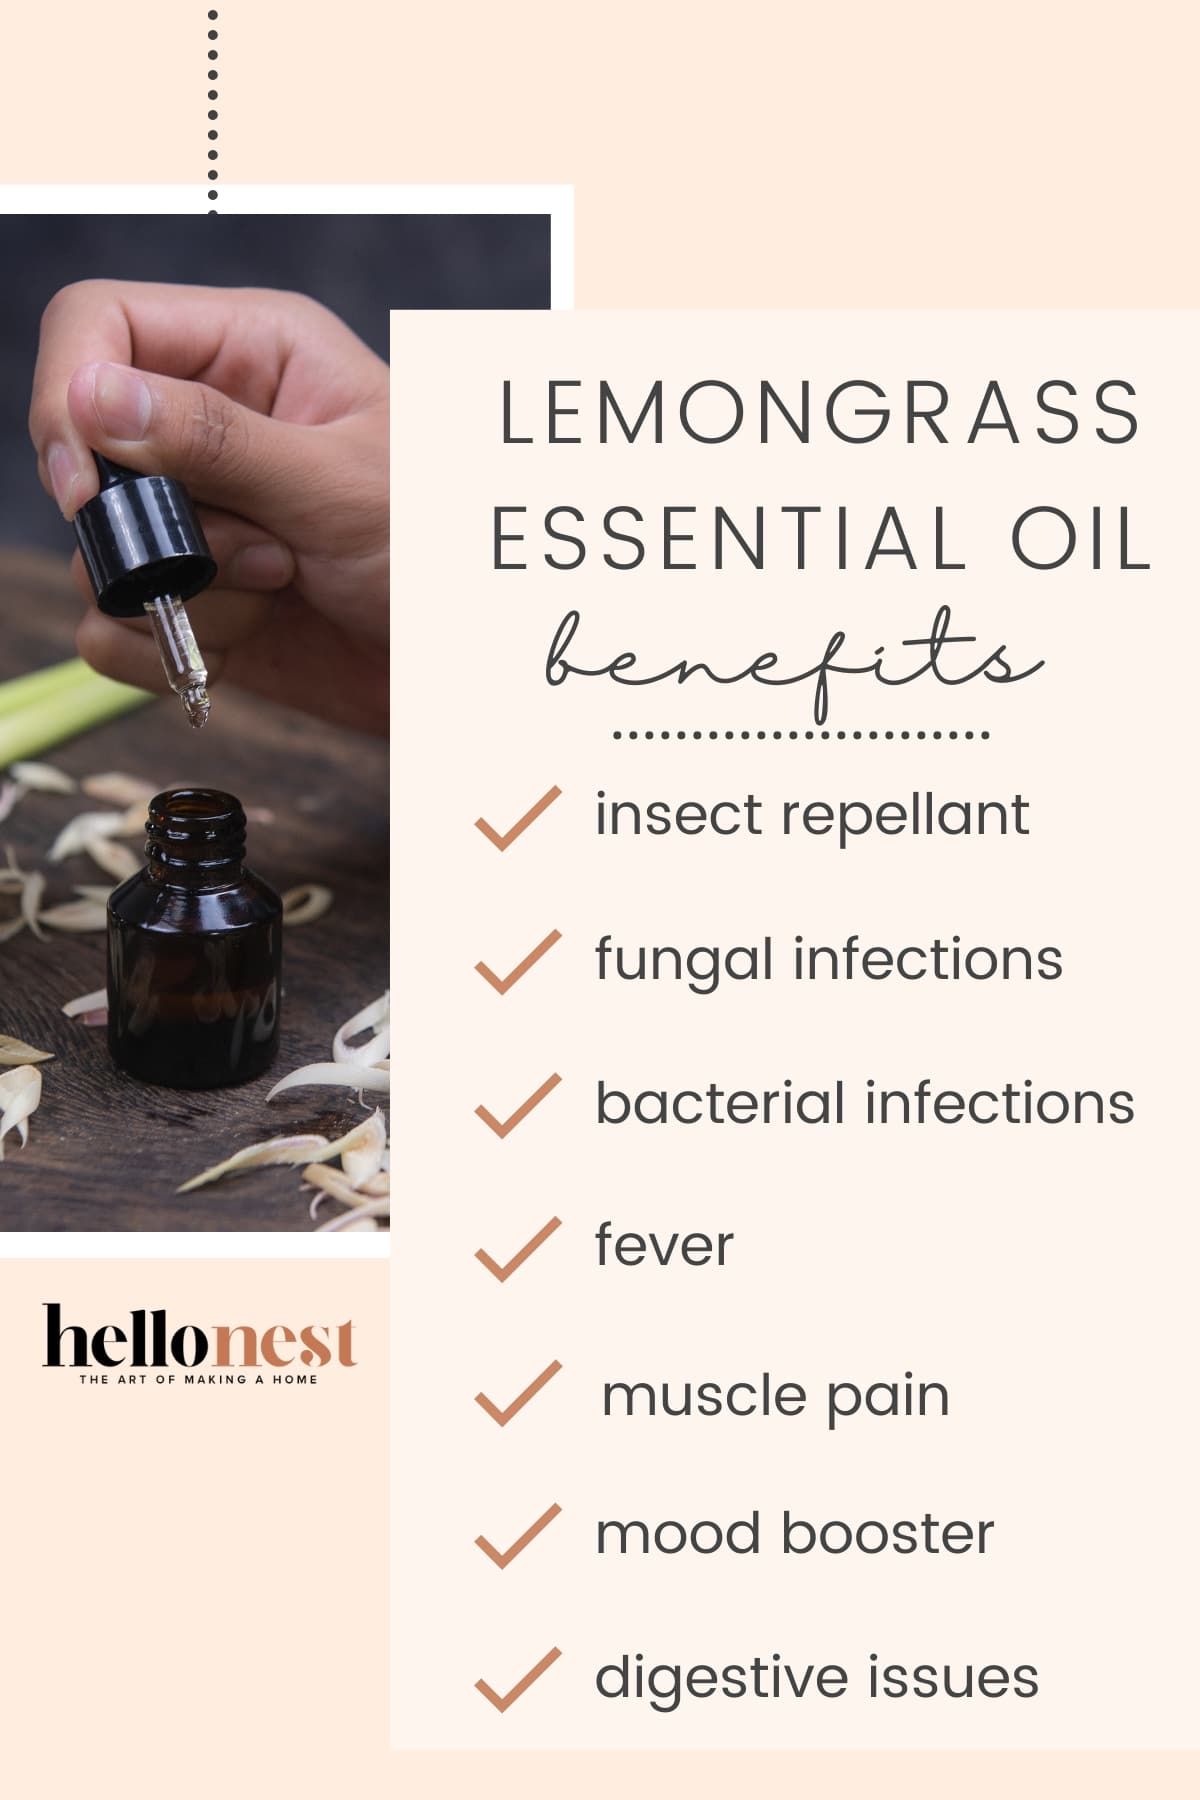 Lemongrass essential oil benefits